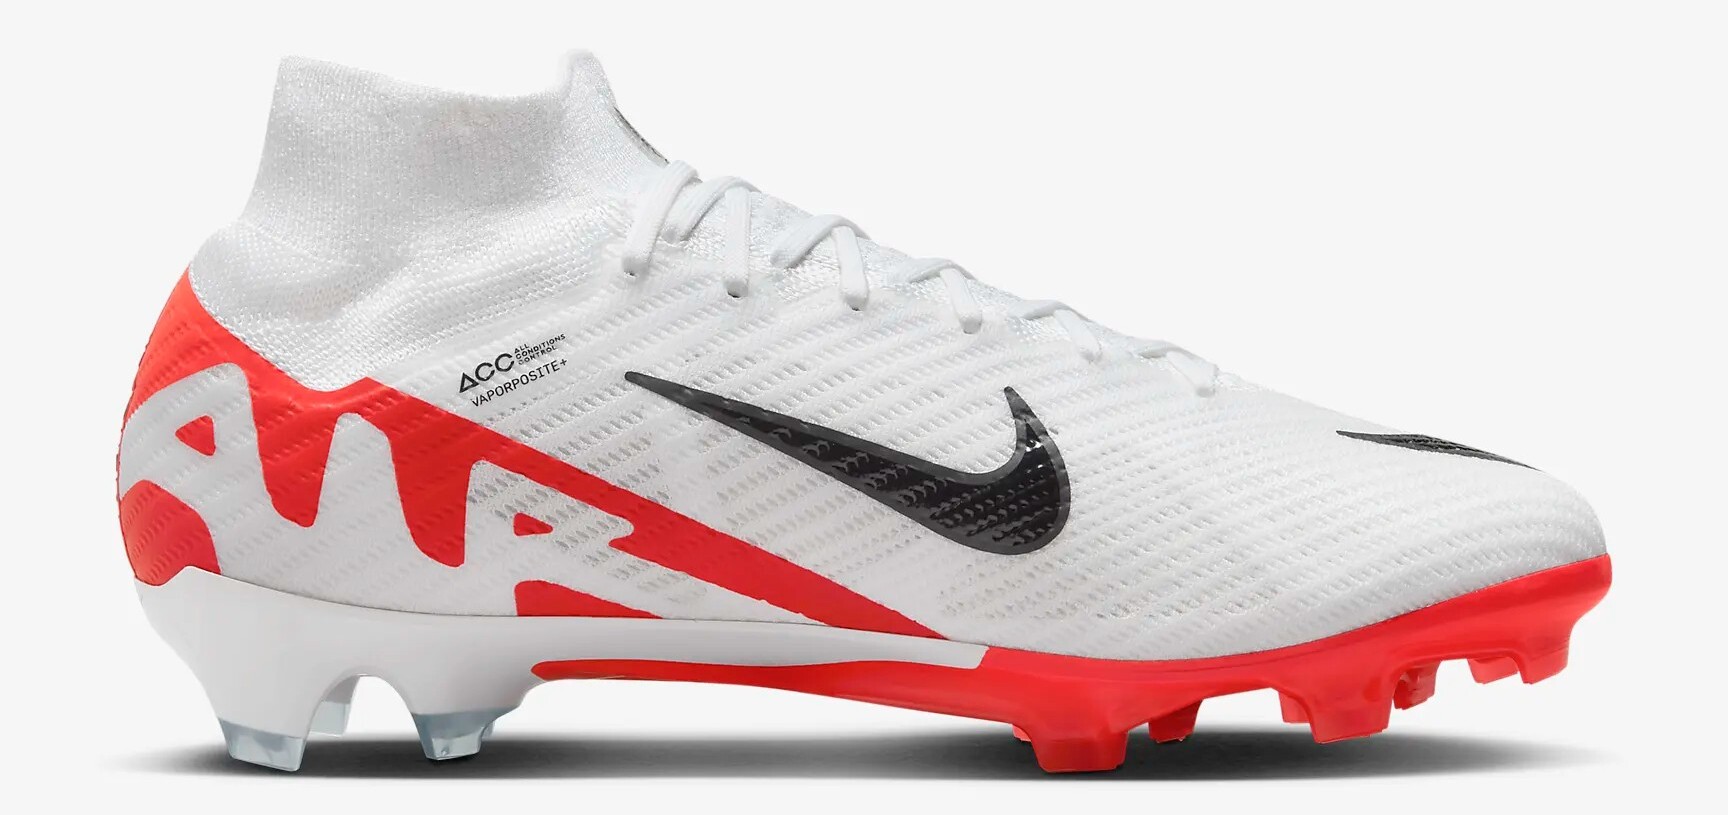 Real Madrid star Cristiano Ronaldo's amazing new diamond-inspired Nike boots  unveiled | The Sun